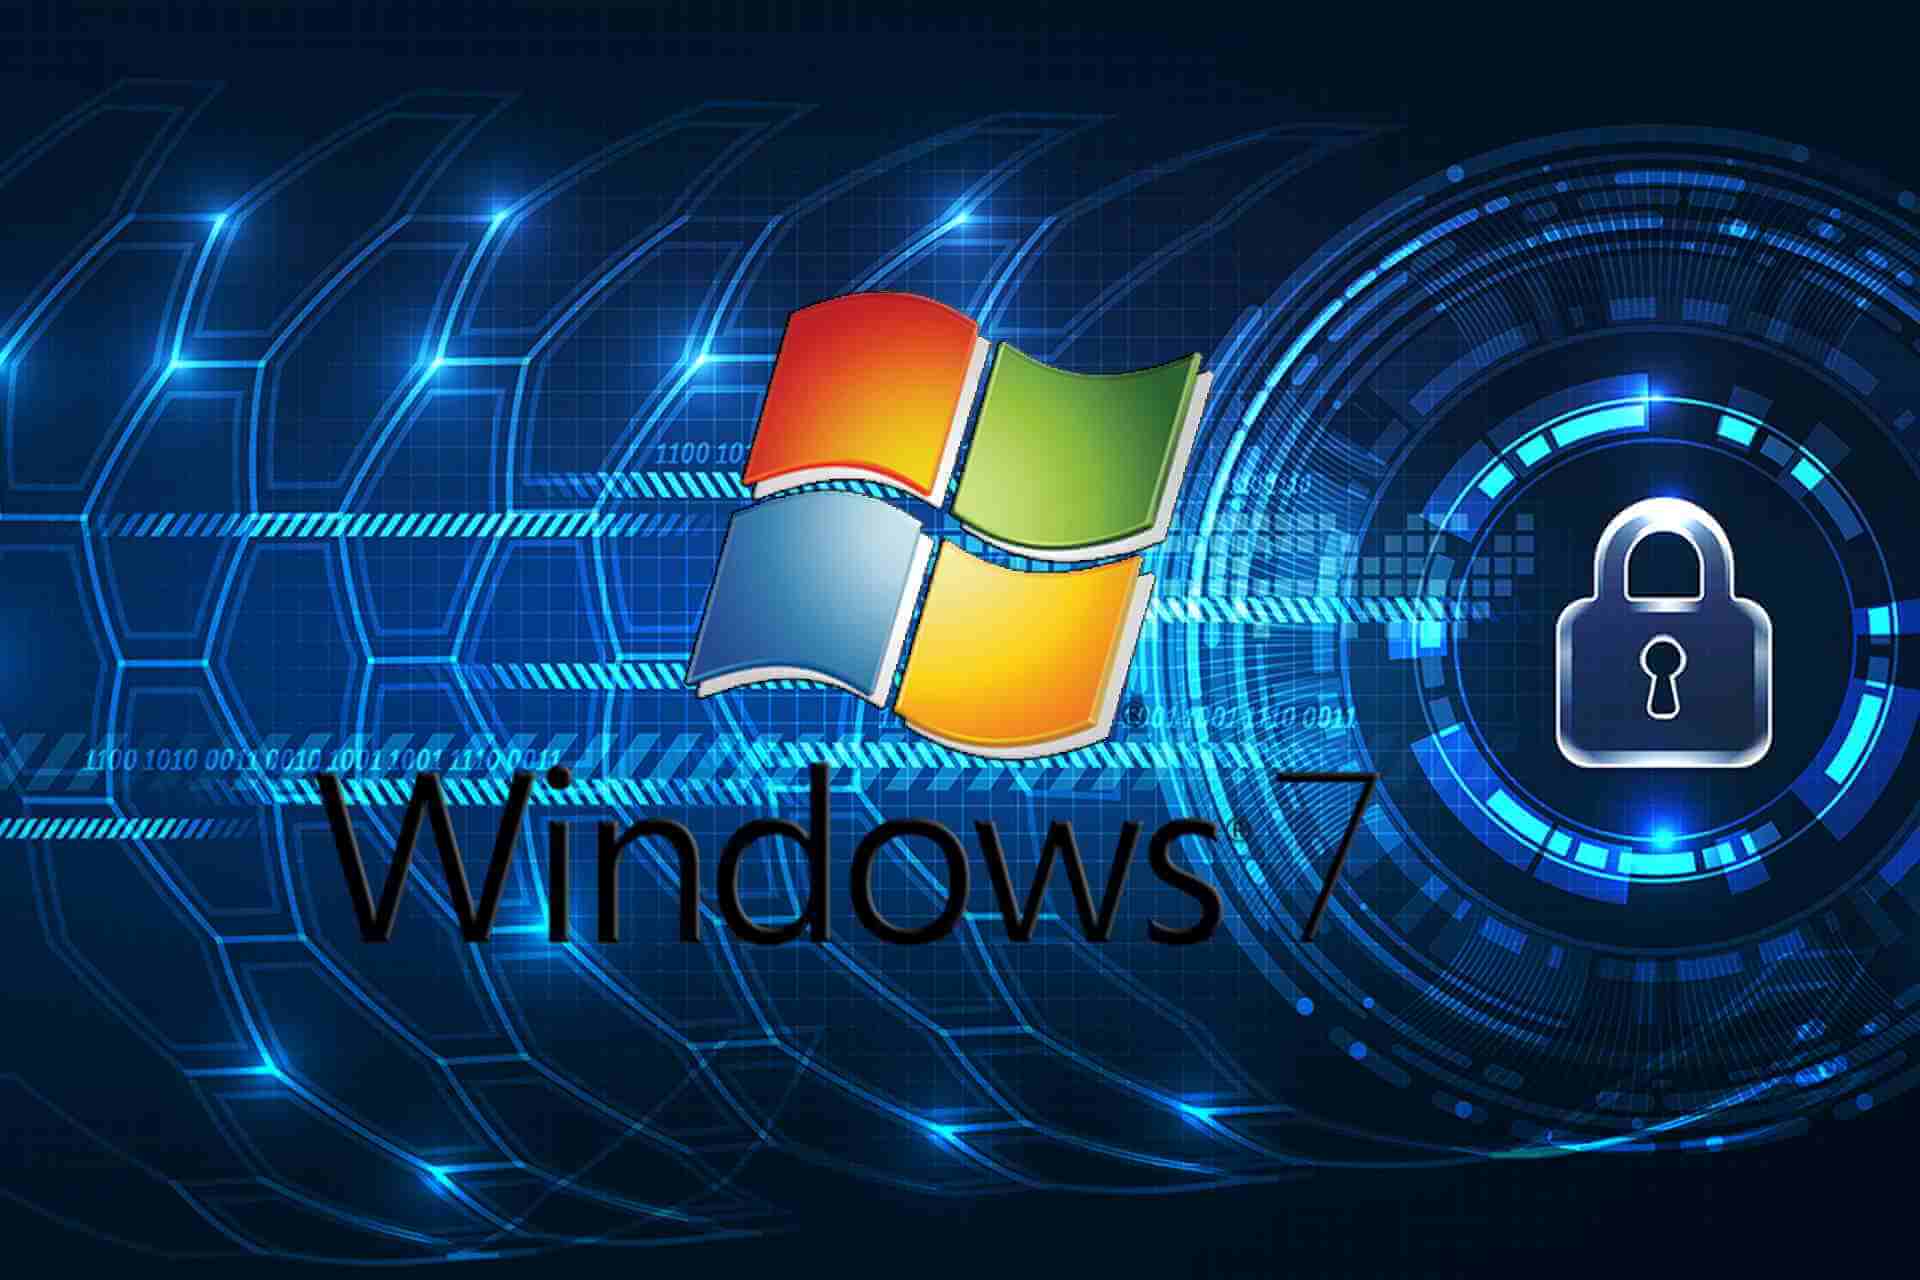 Best Windows 7 antivirus solutions